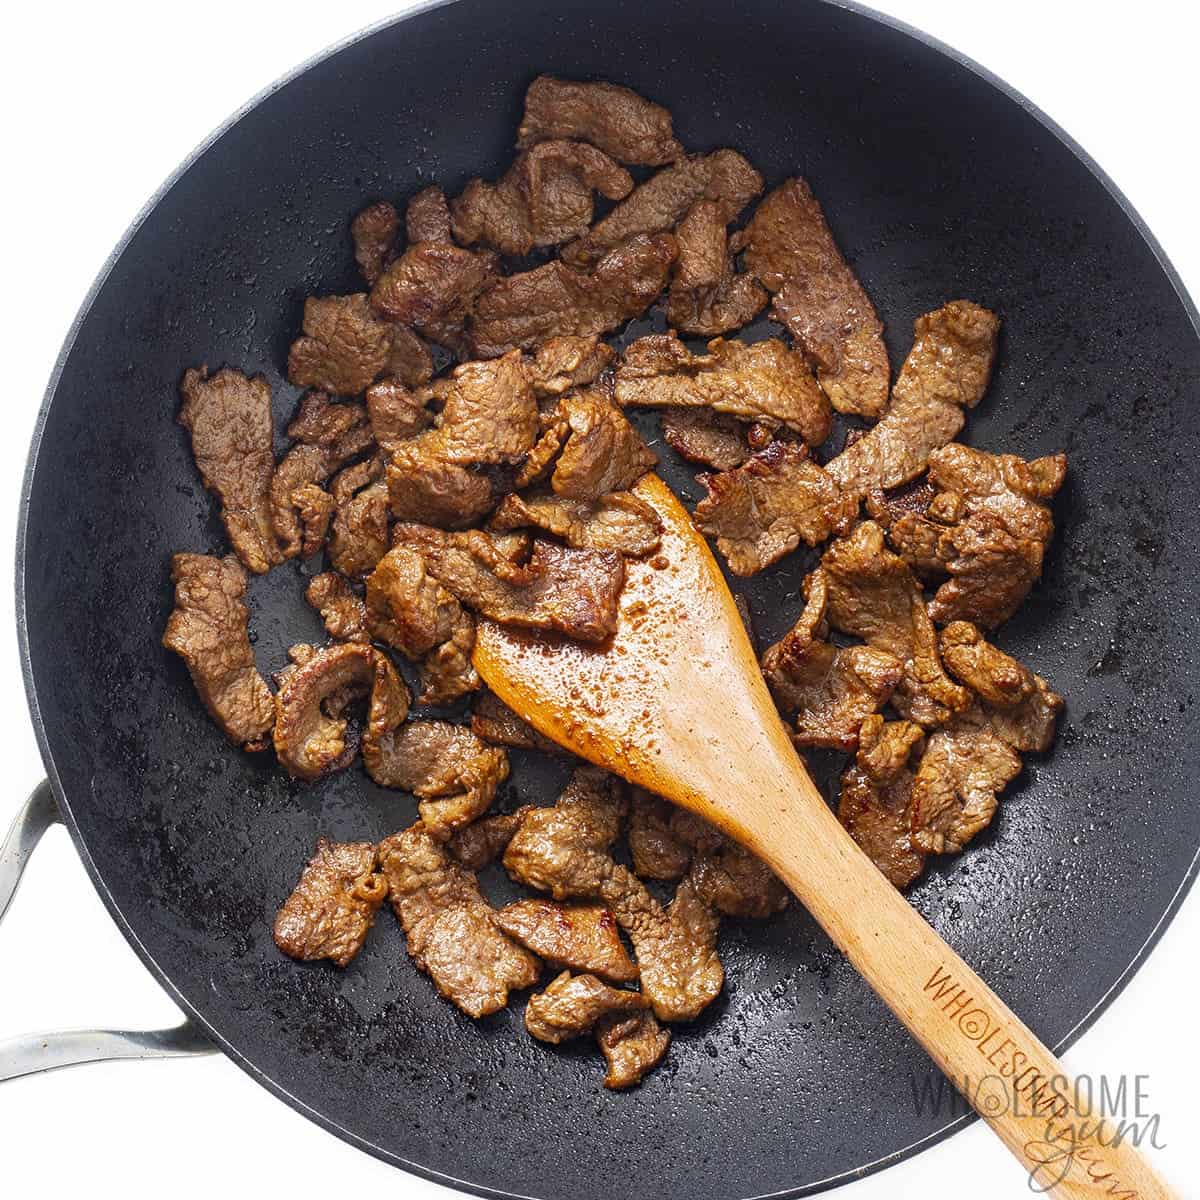 Skillet with stir fried steak.